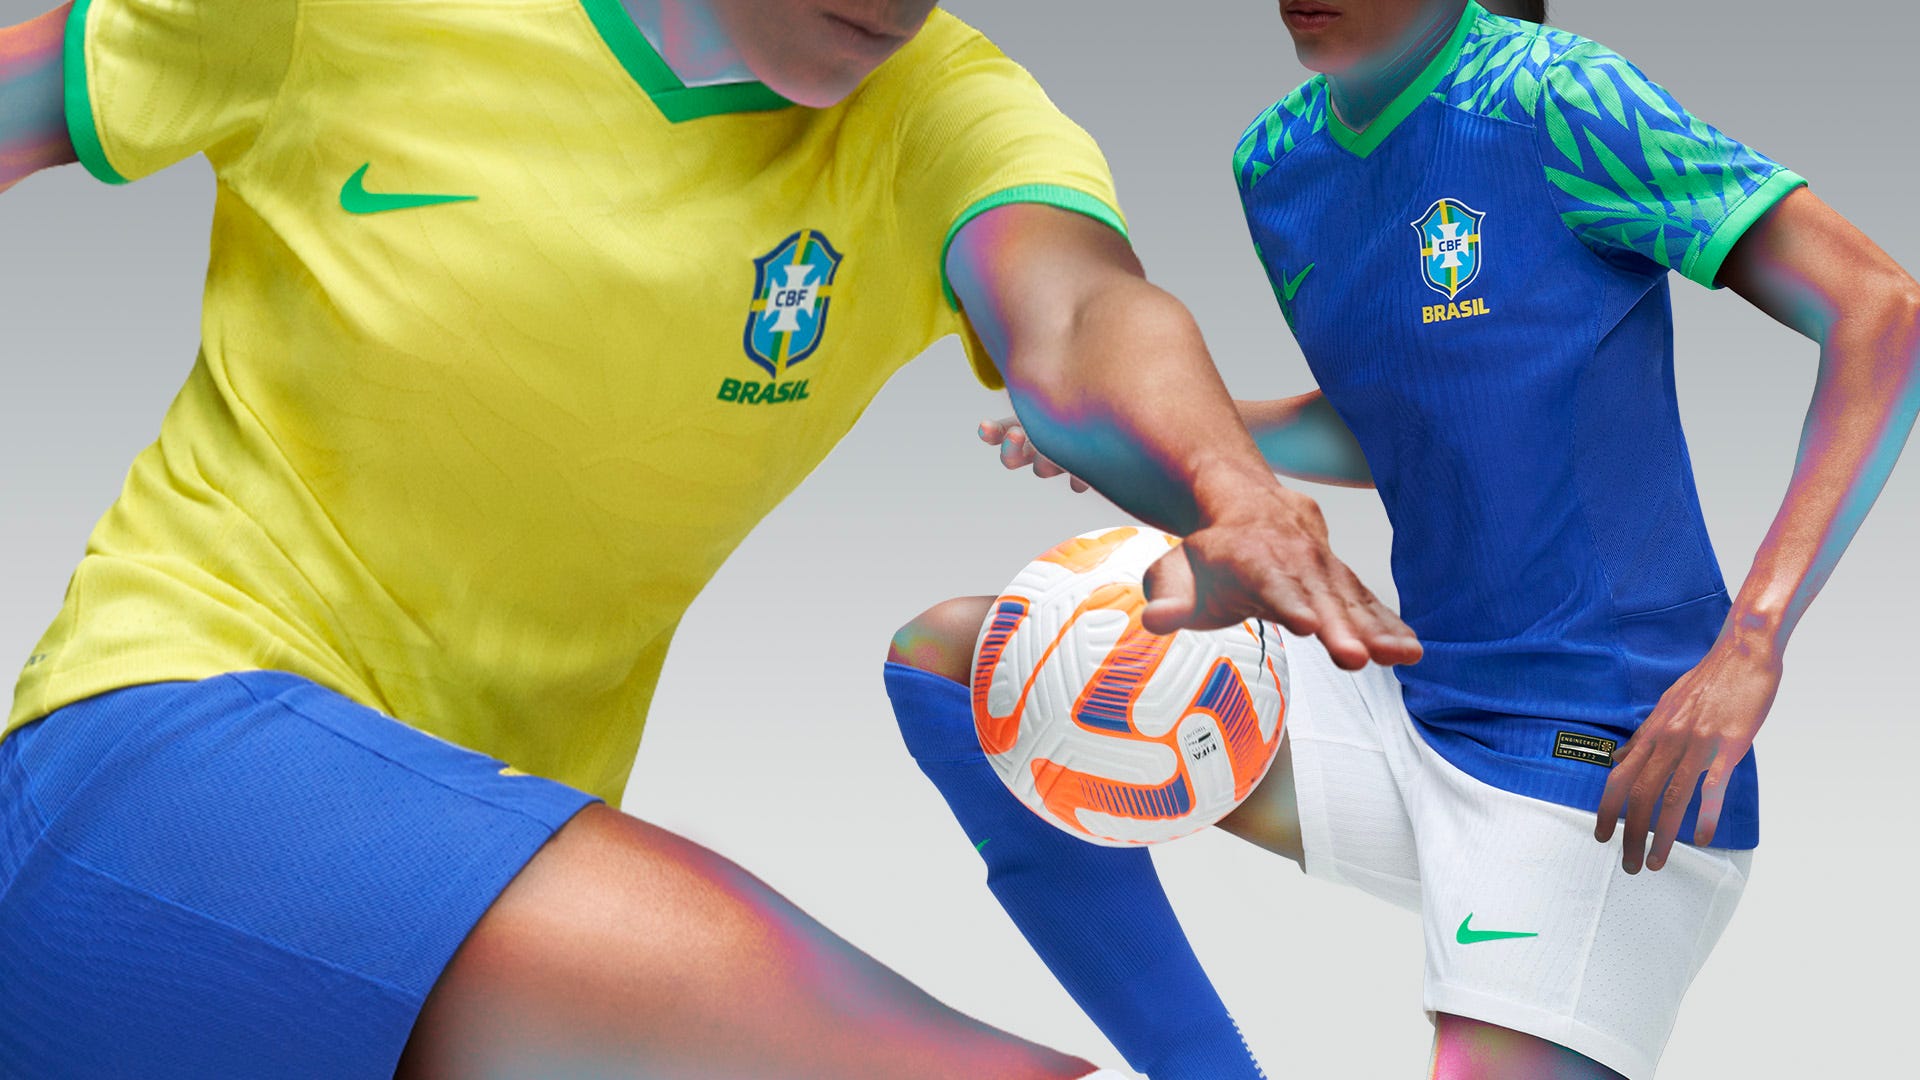 Camisa Nike Internacional III Feminina Torcida Amarela - Compre Agora